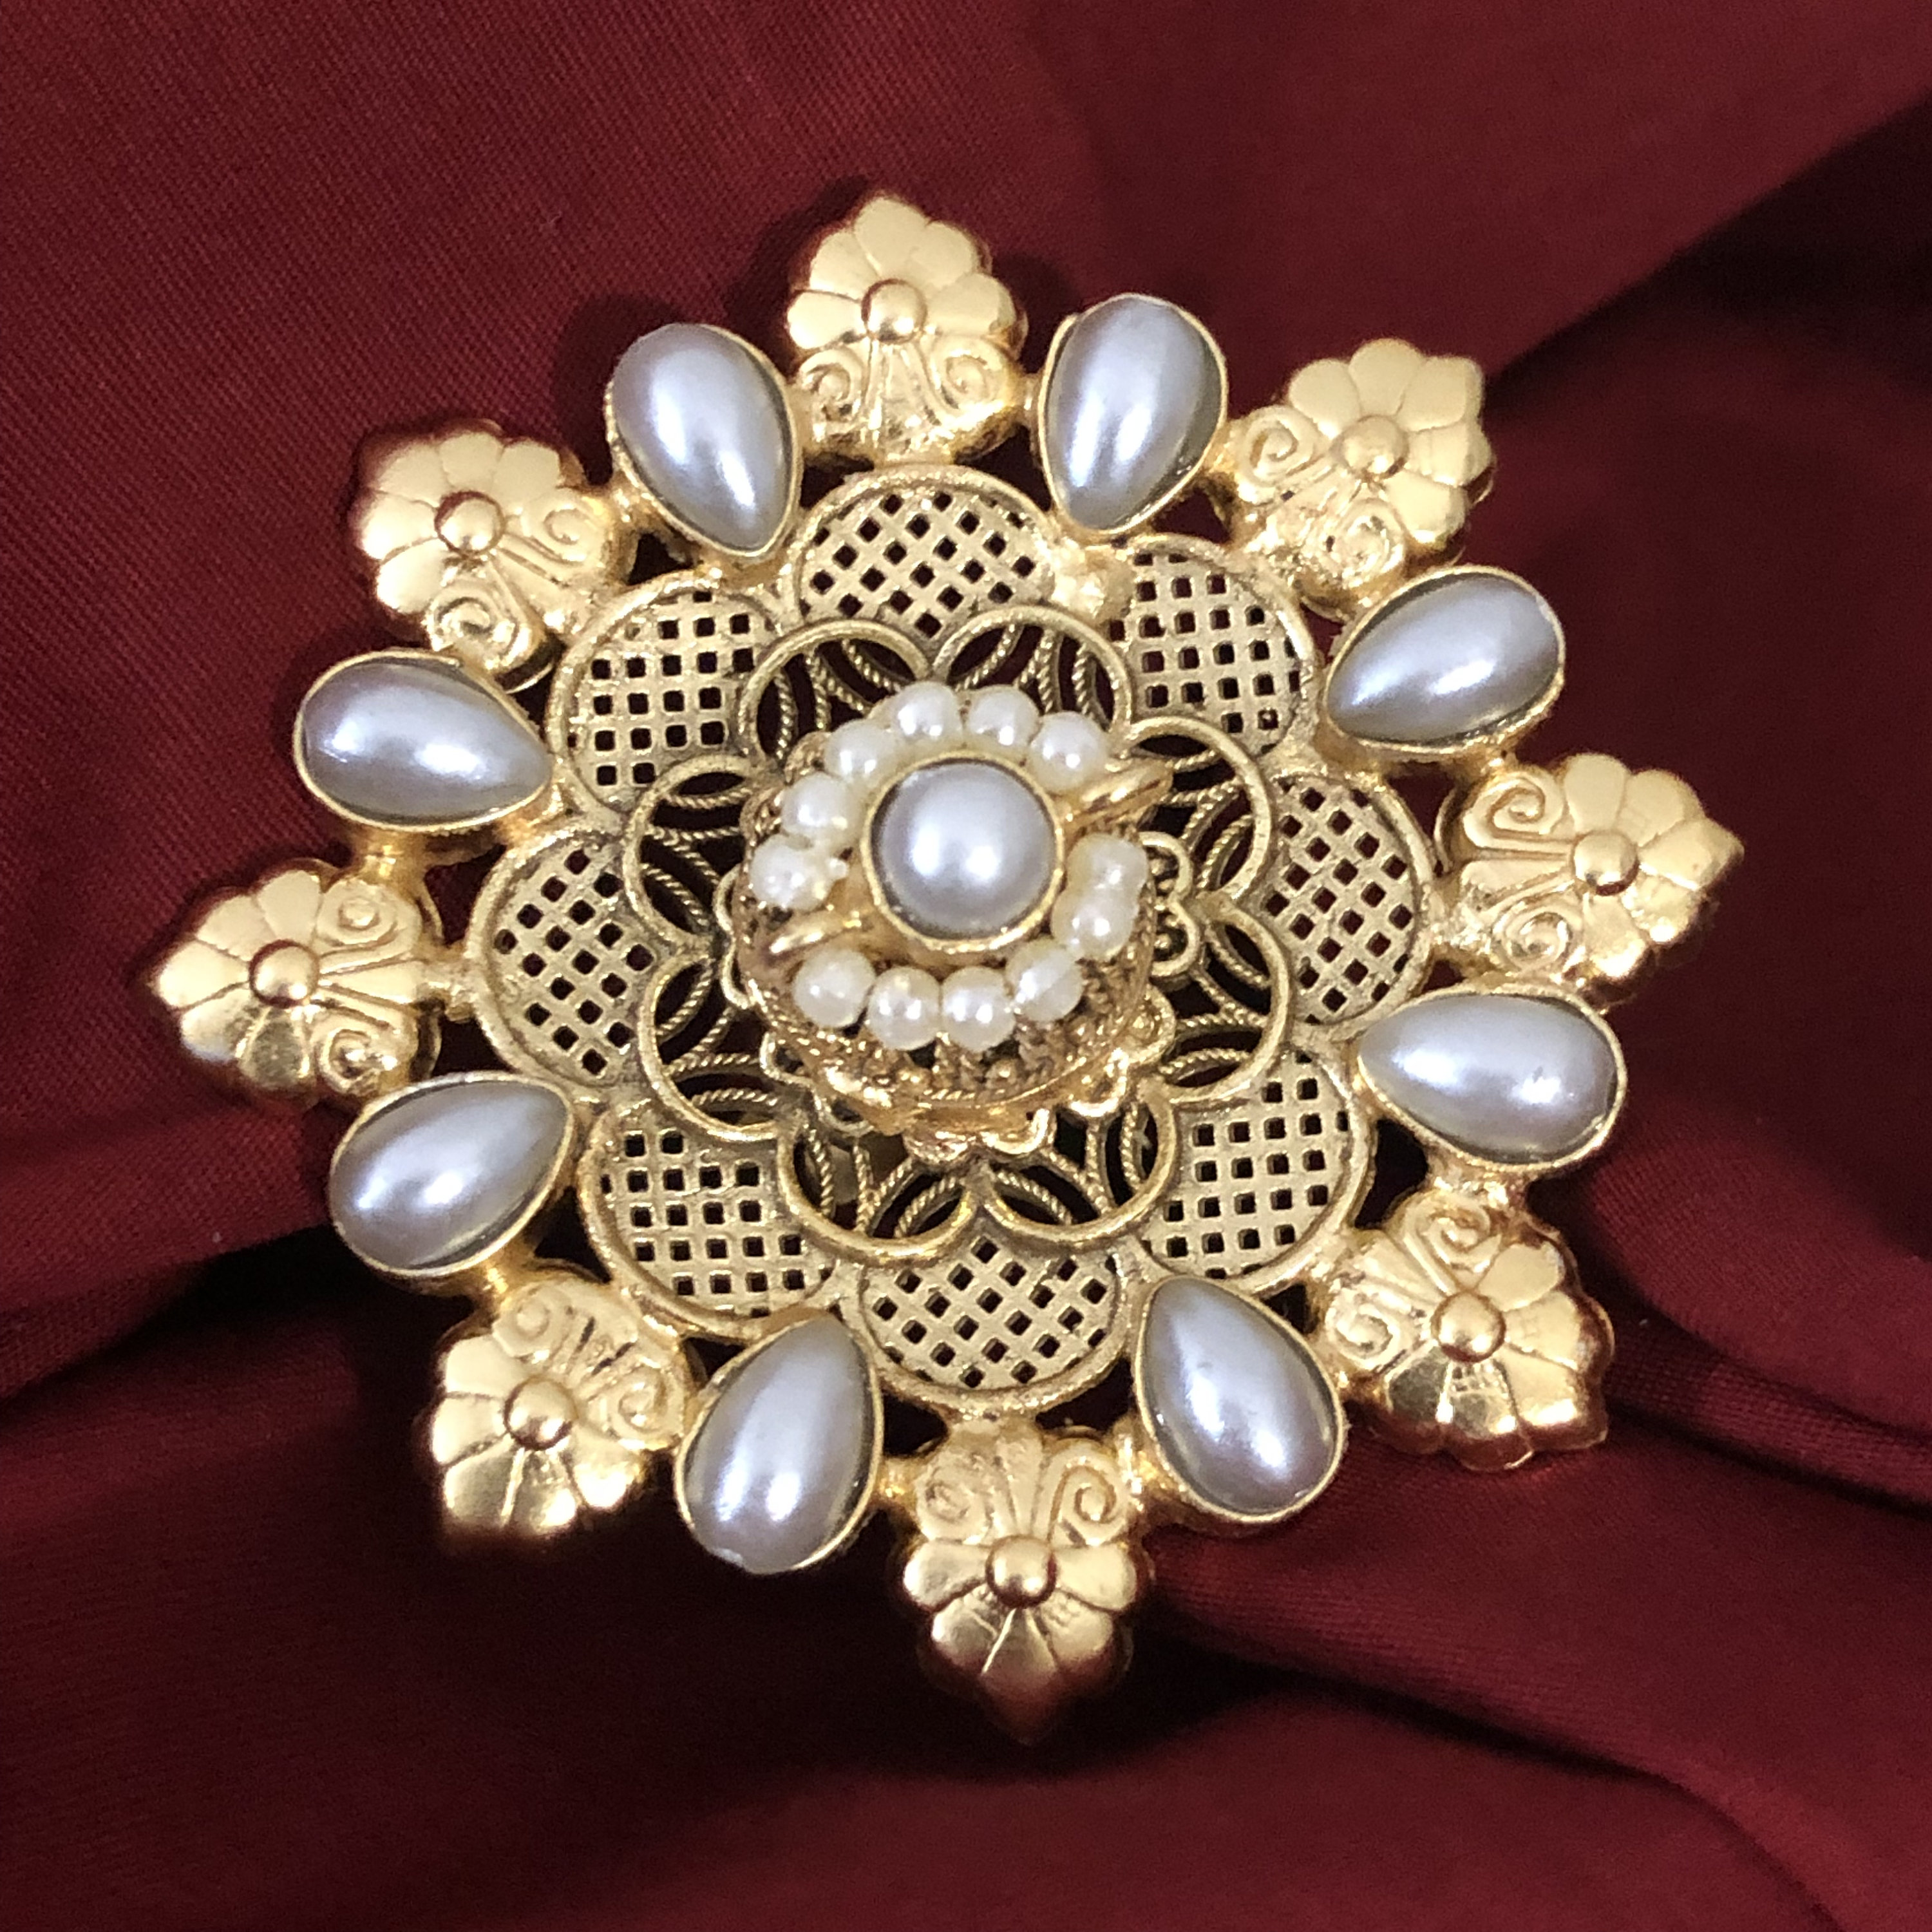 Boho Antique Gold Fashion Crystal Vintage Ring – Rings Universe